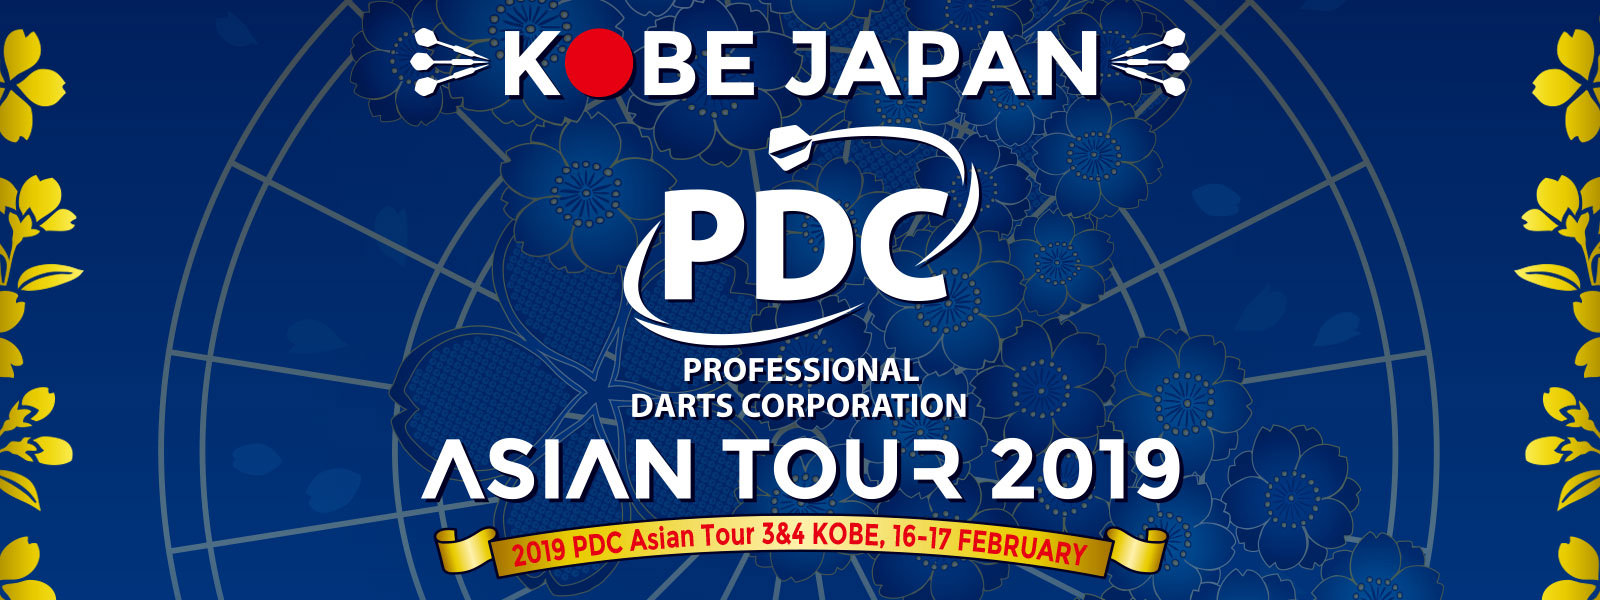 pdc asian tour 2019 kobe